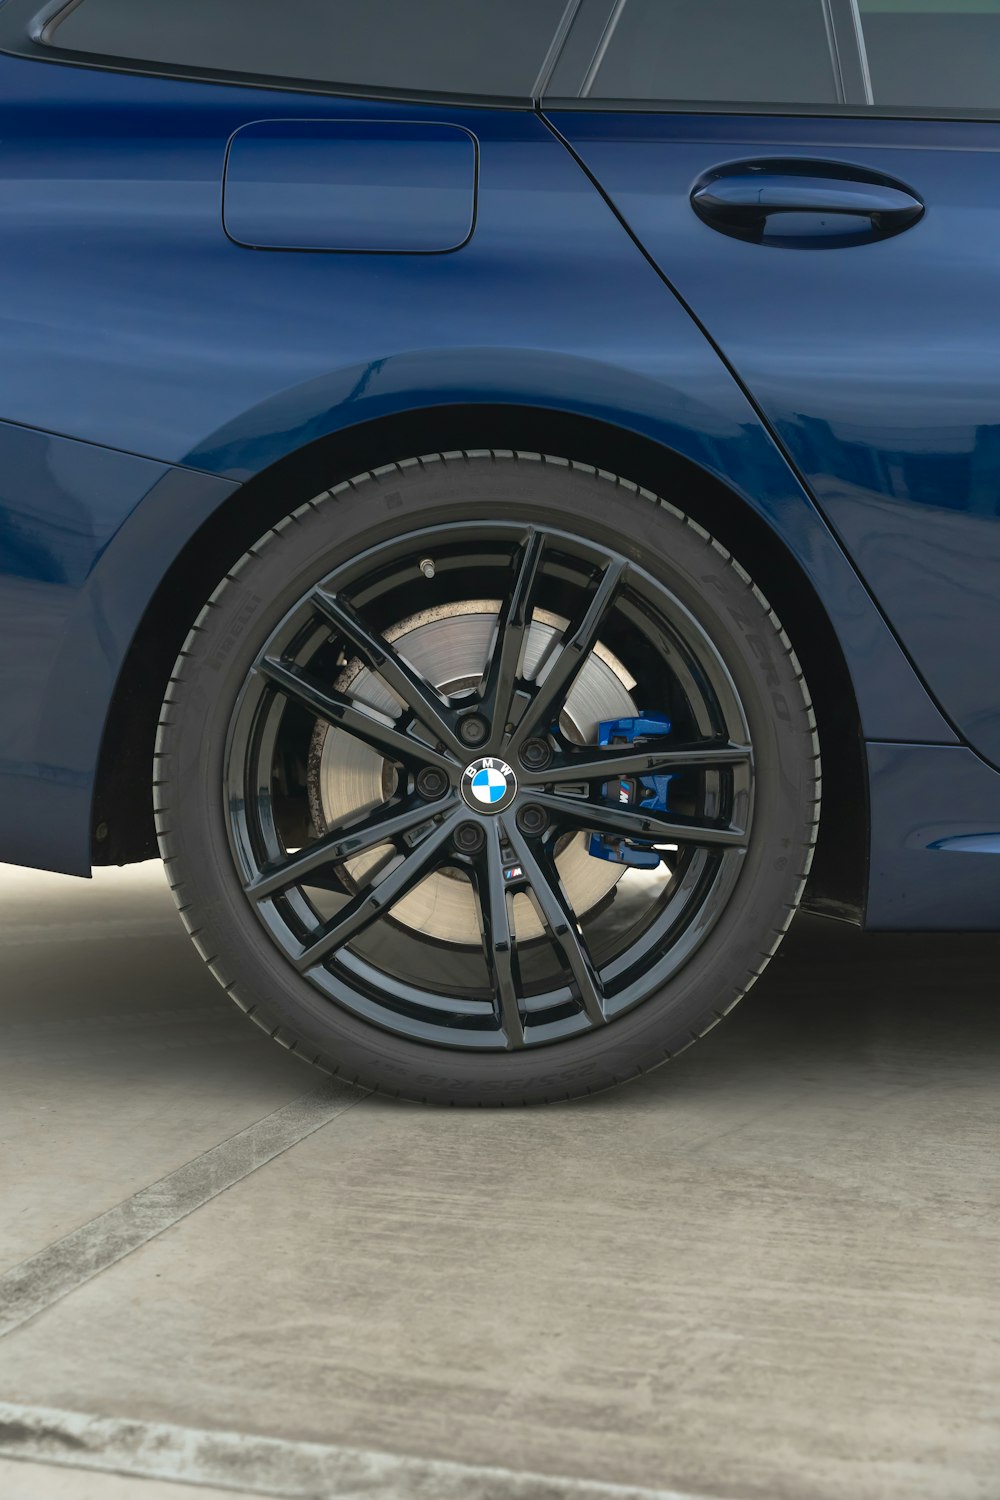 a close up of a bmw wheel on a blue car